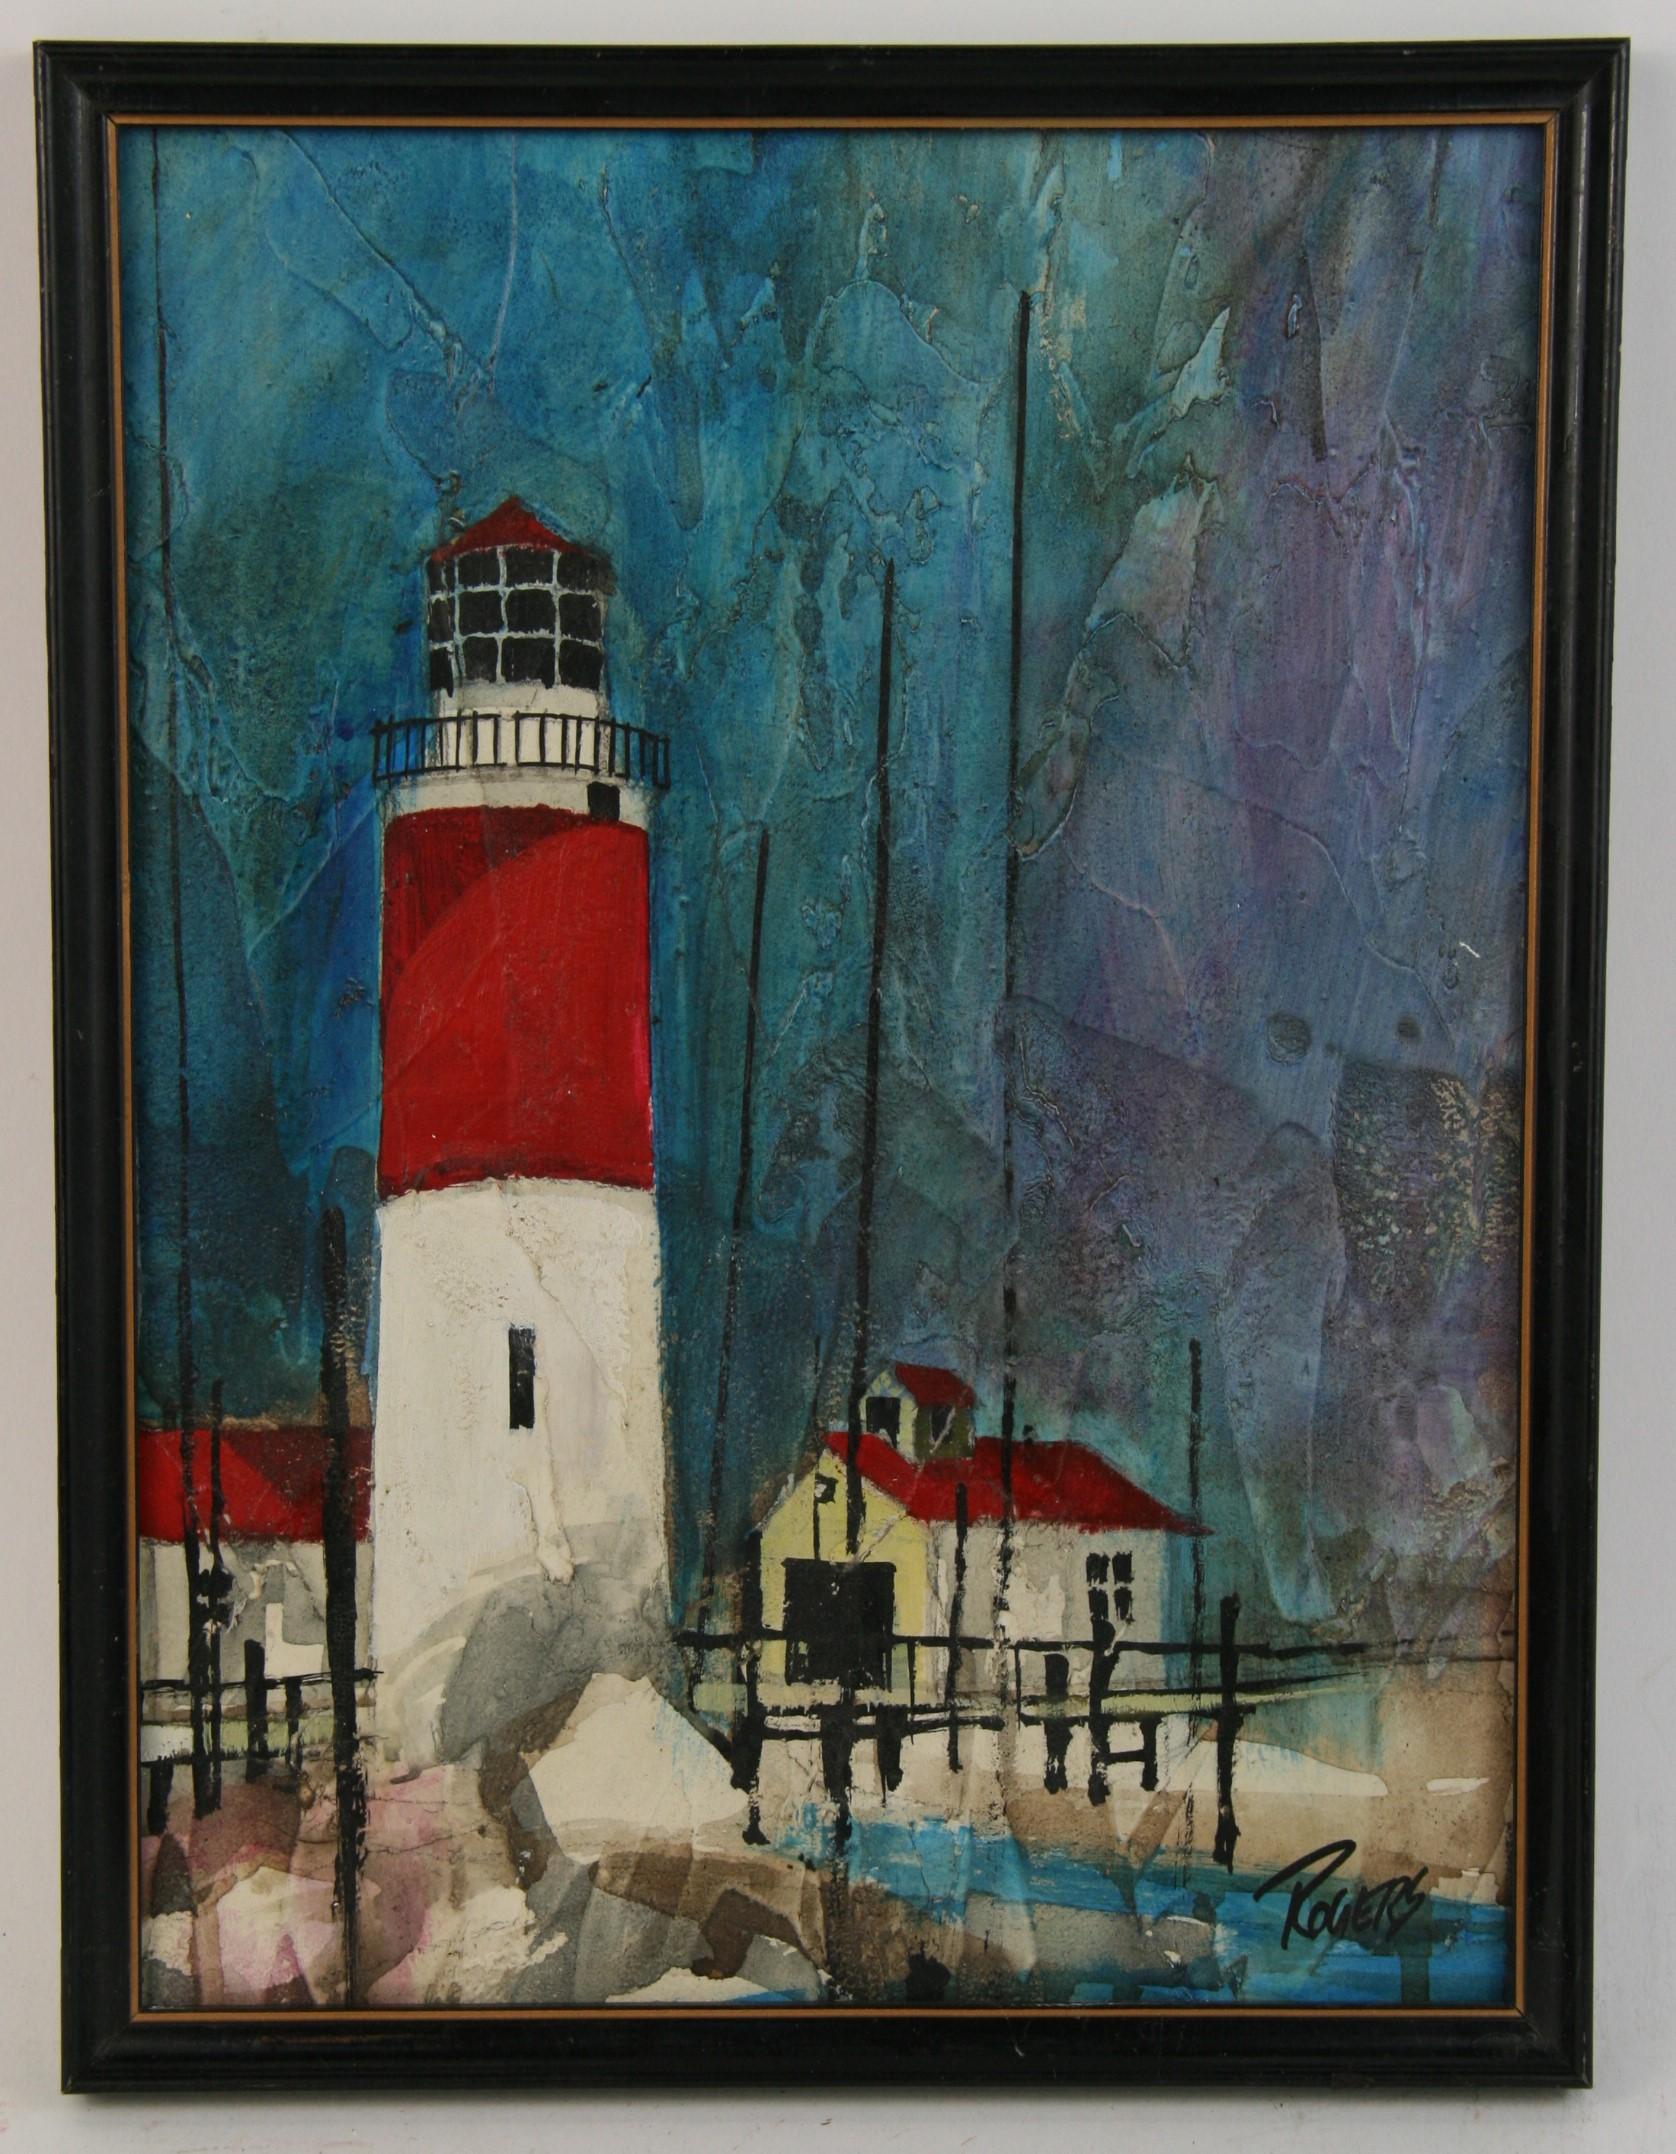 Rogers Landscape Painting - Vintage American East Coast Lighthouse Seascape Landscape Oil Painting 1960